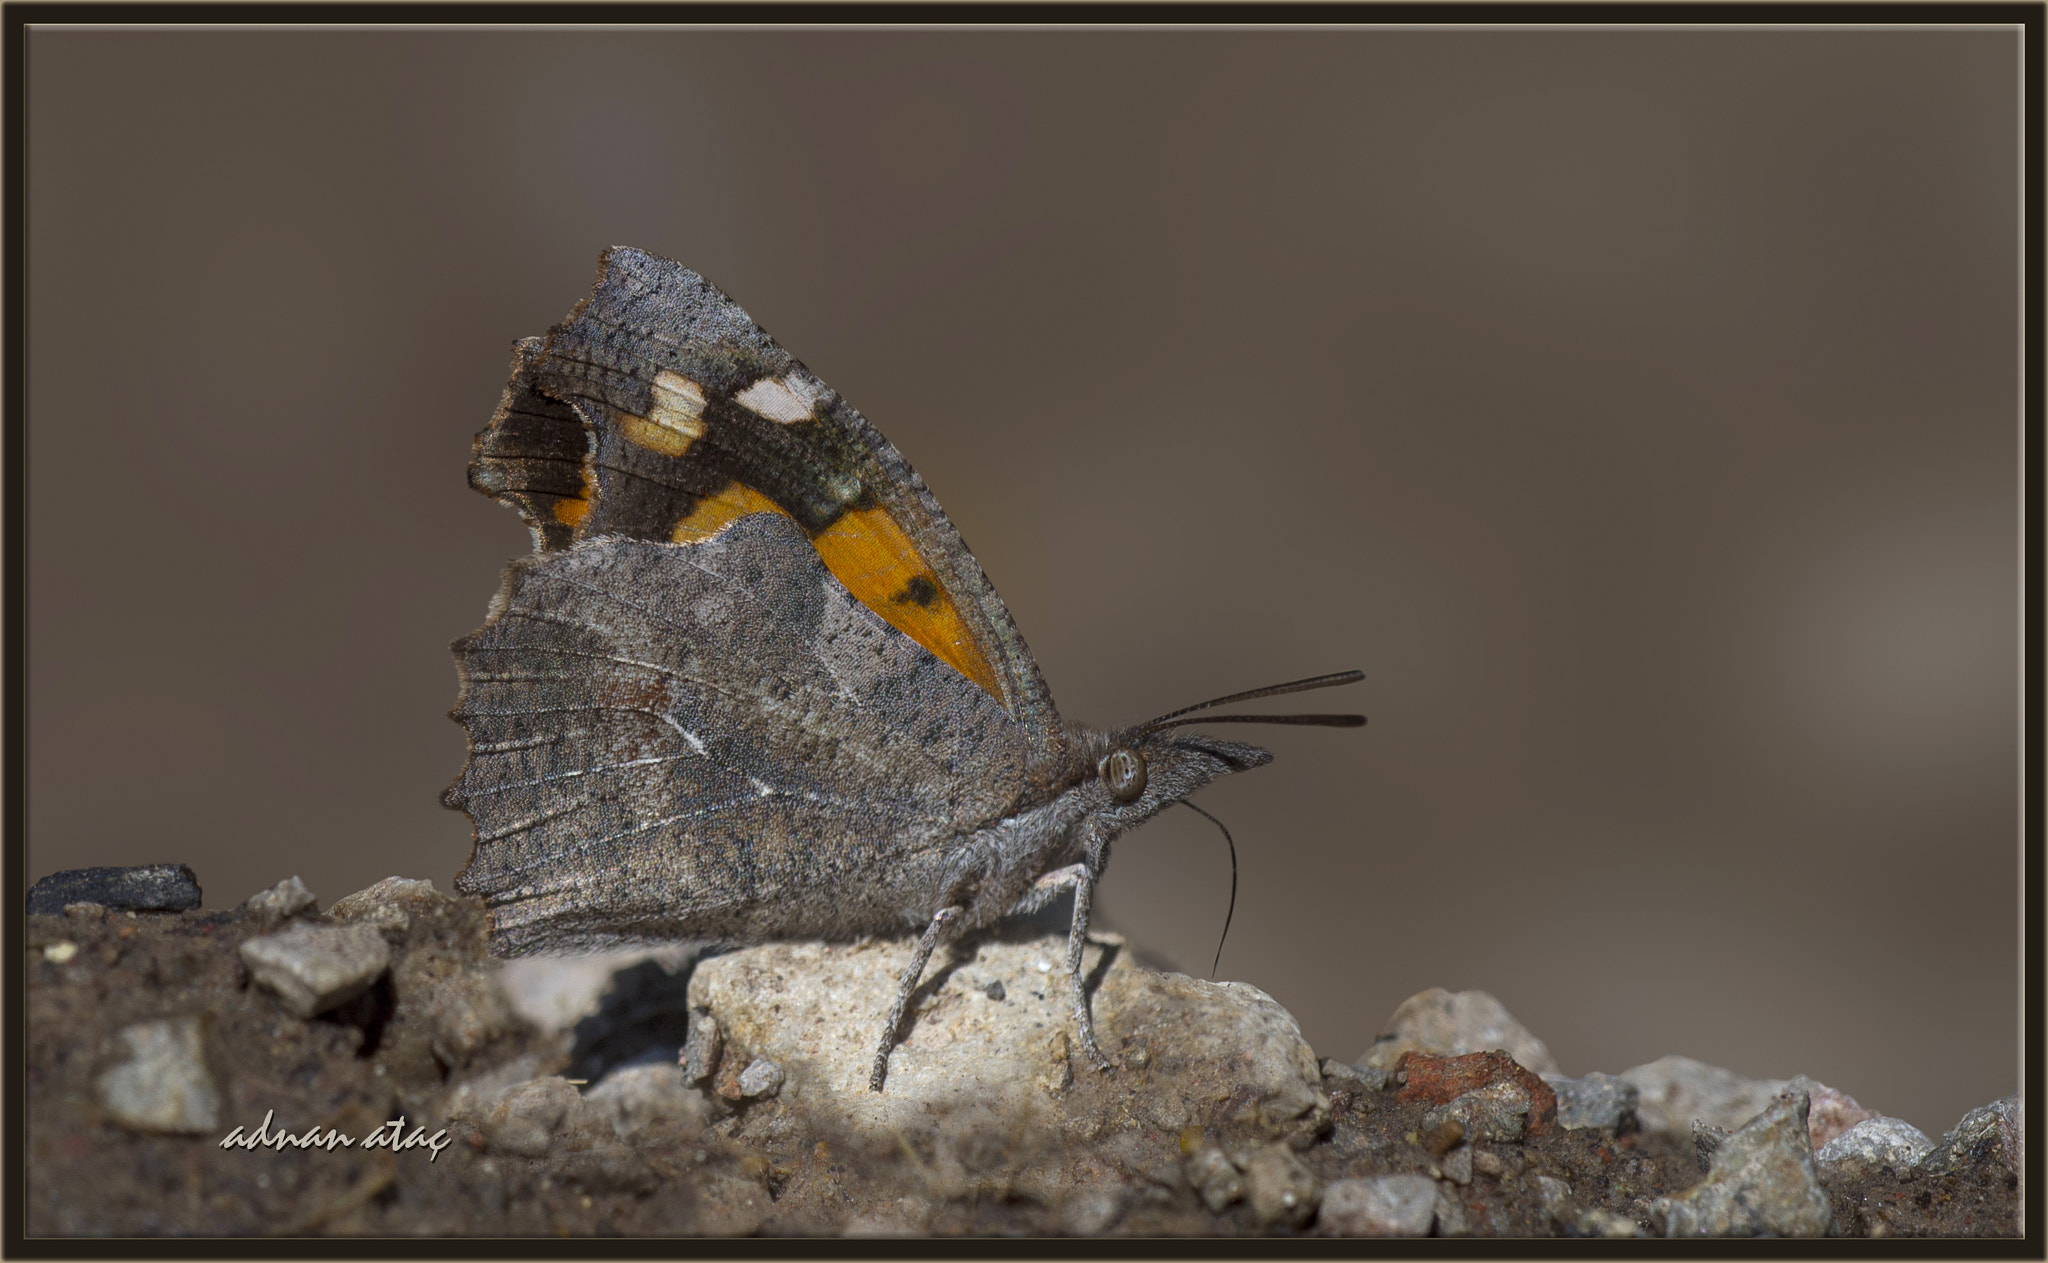 AF Zoom-Micro Nikkor 70-180mm f/4.5-5.6D ED sample photo. Çitlembik kelebeği - libythea celtis - nettle tree butterfly photography